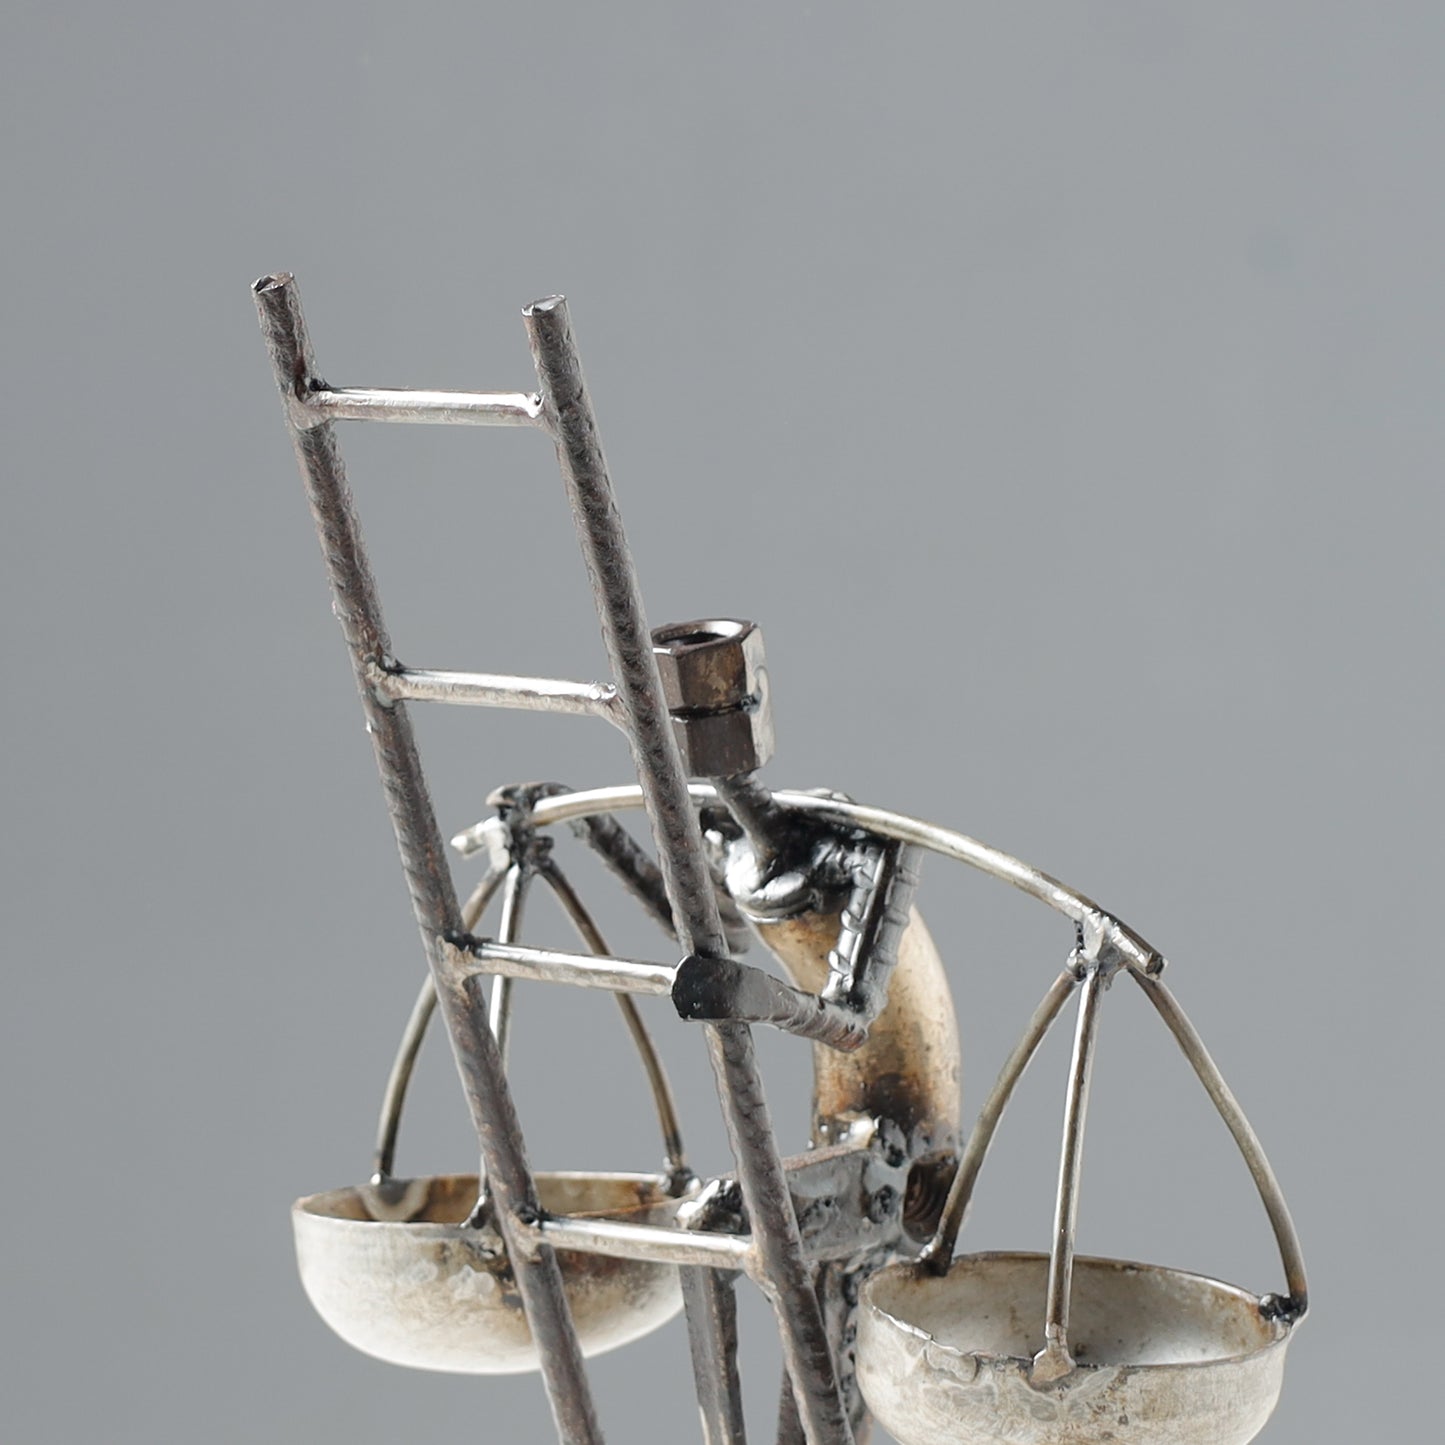 Ladder Man with Double Basket - Handmade Recycled Metal Sculpture by Debabrata Ruidas